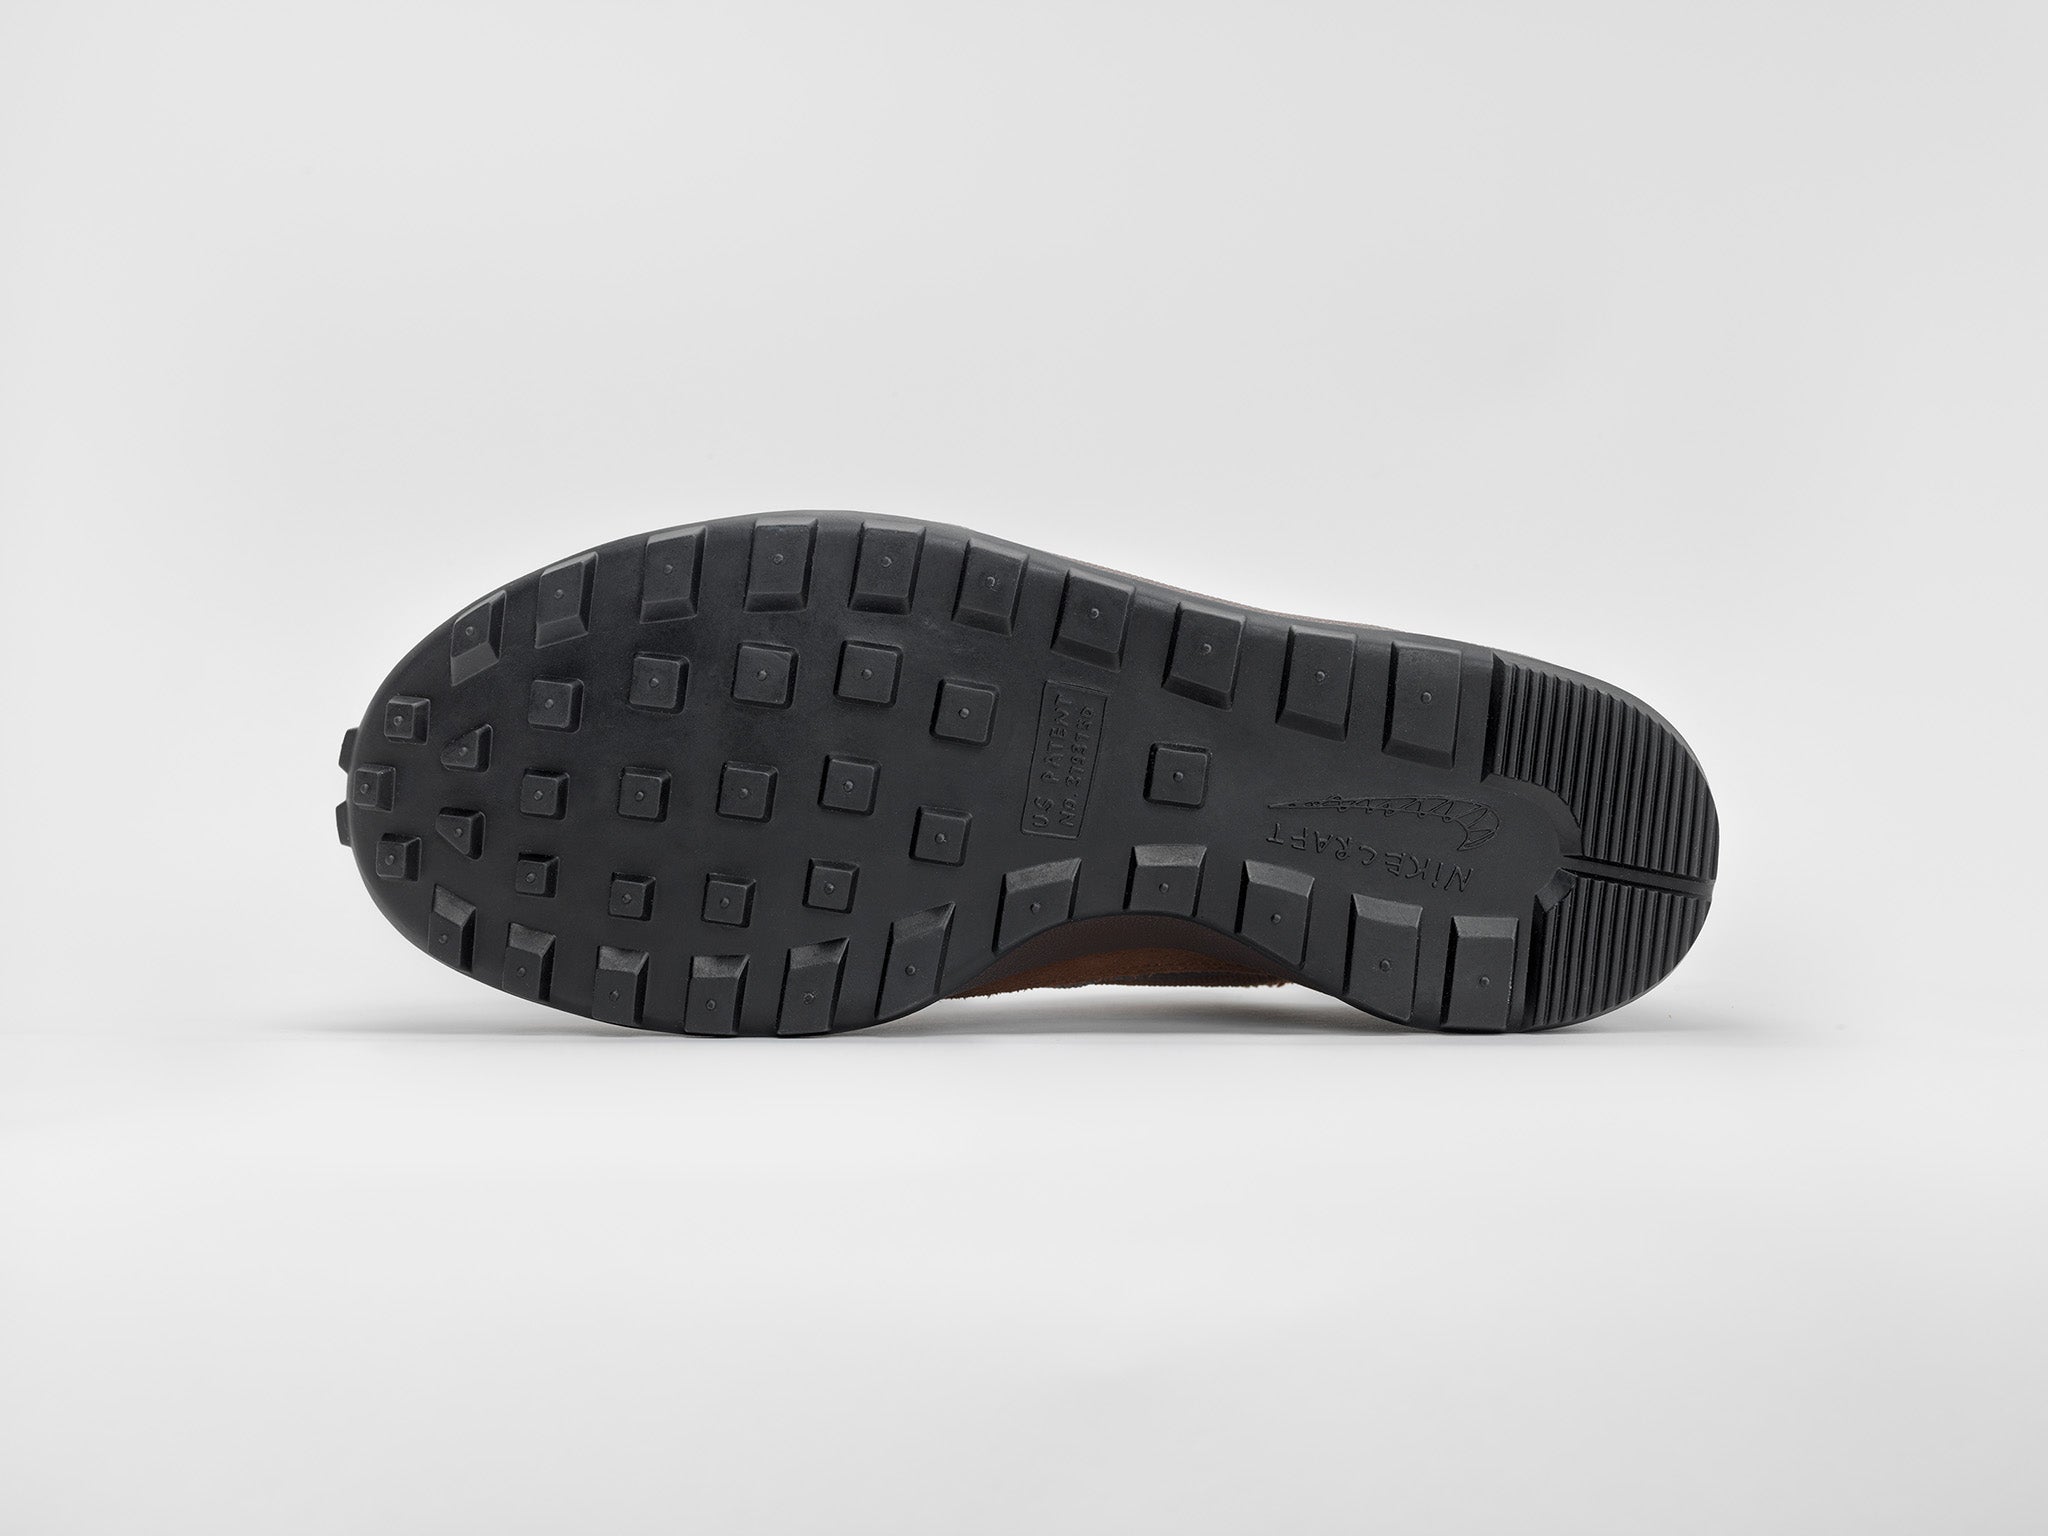 Where to buy Tom Sachs x NikeCraft General Purpose Shoe “Brown